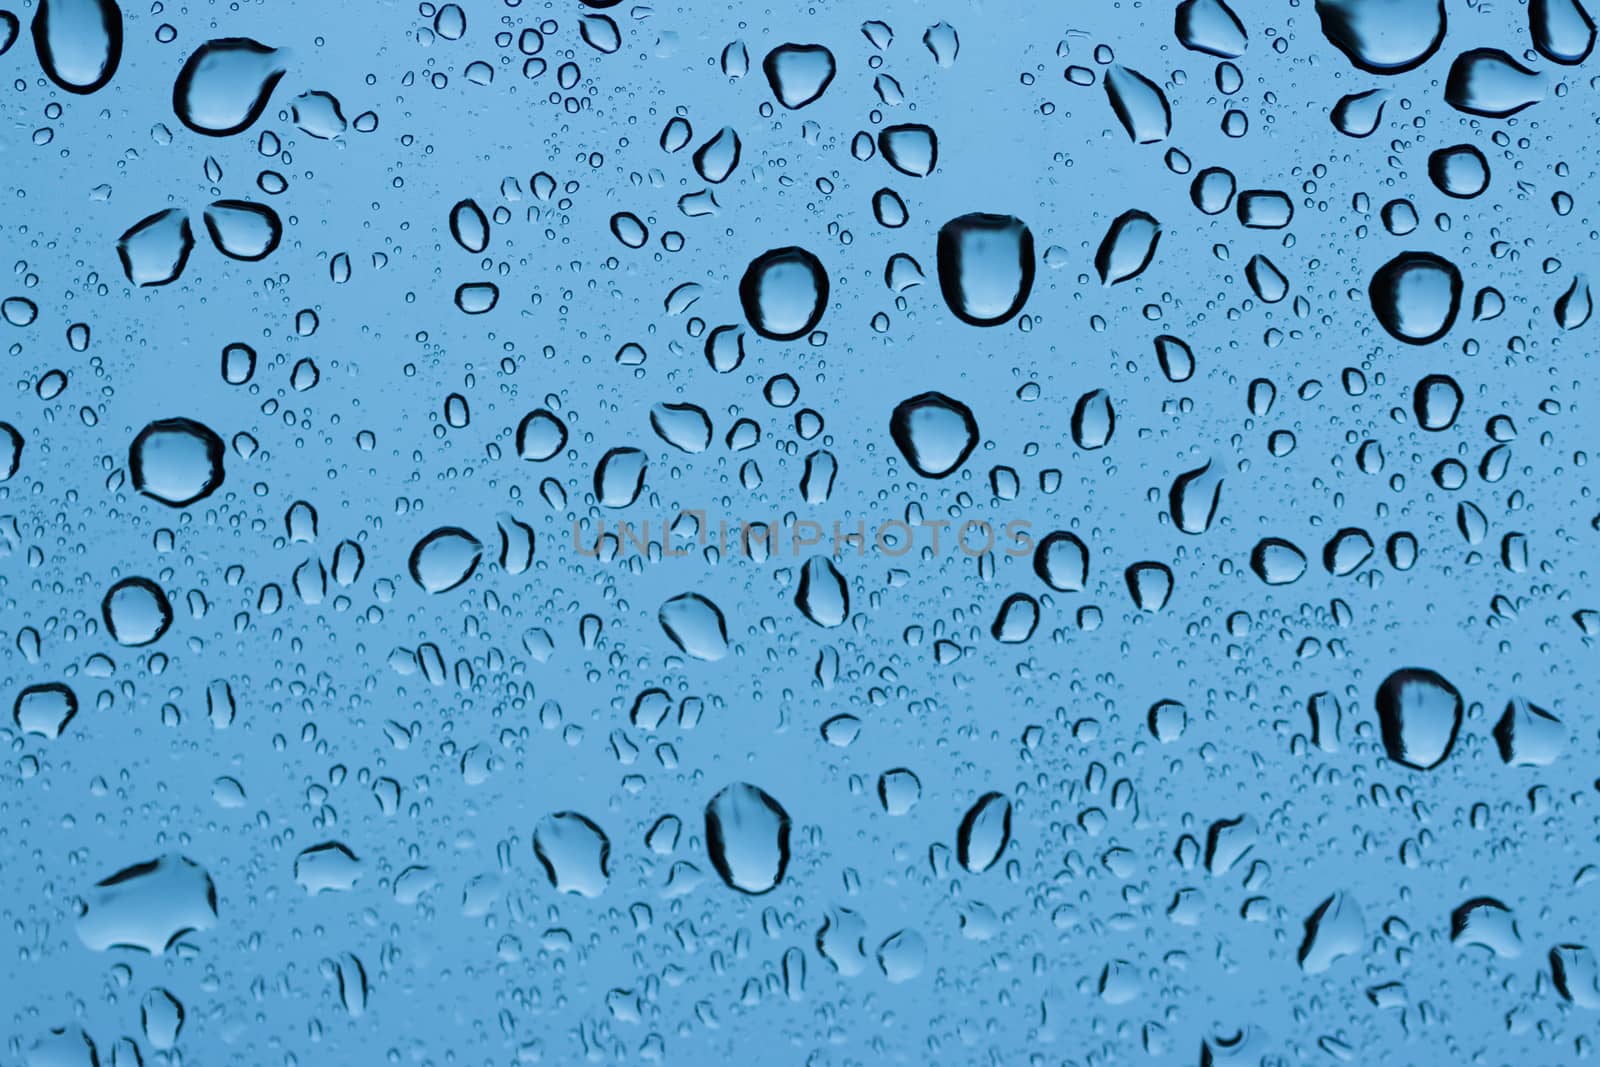 rain drops on a window glass. Shallow DOF